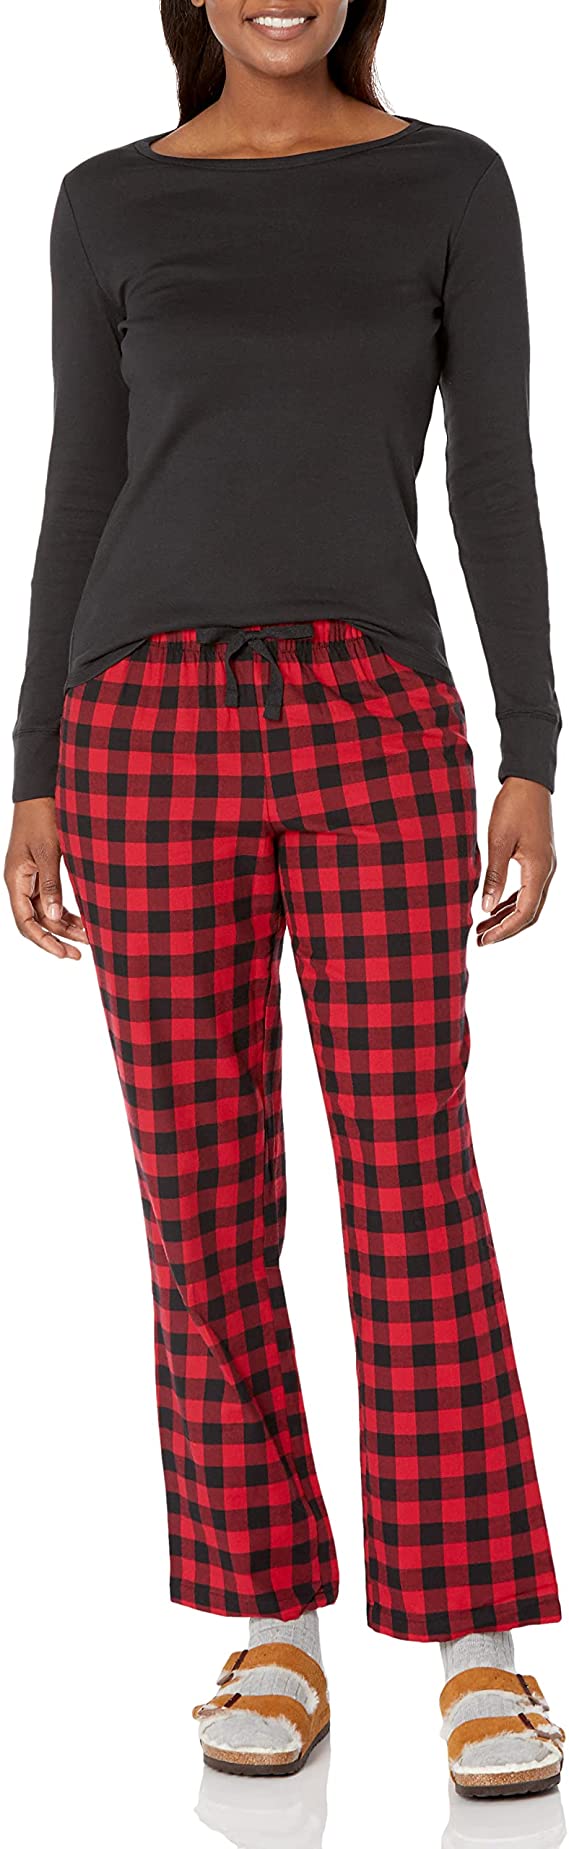 Amazon Essentials Machine Washable Flannel Pajamas For Women